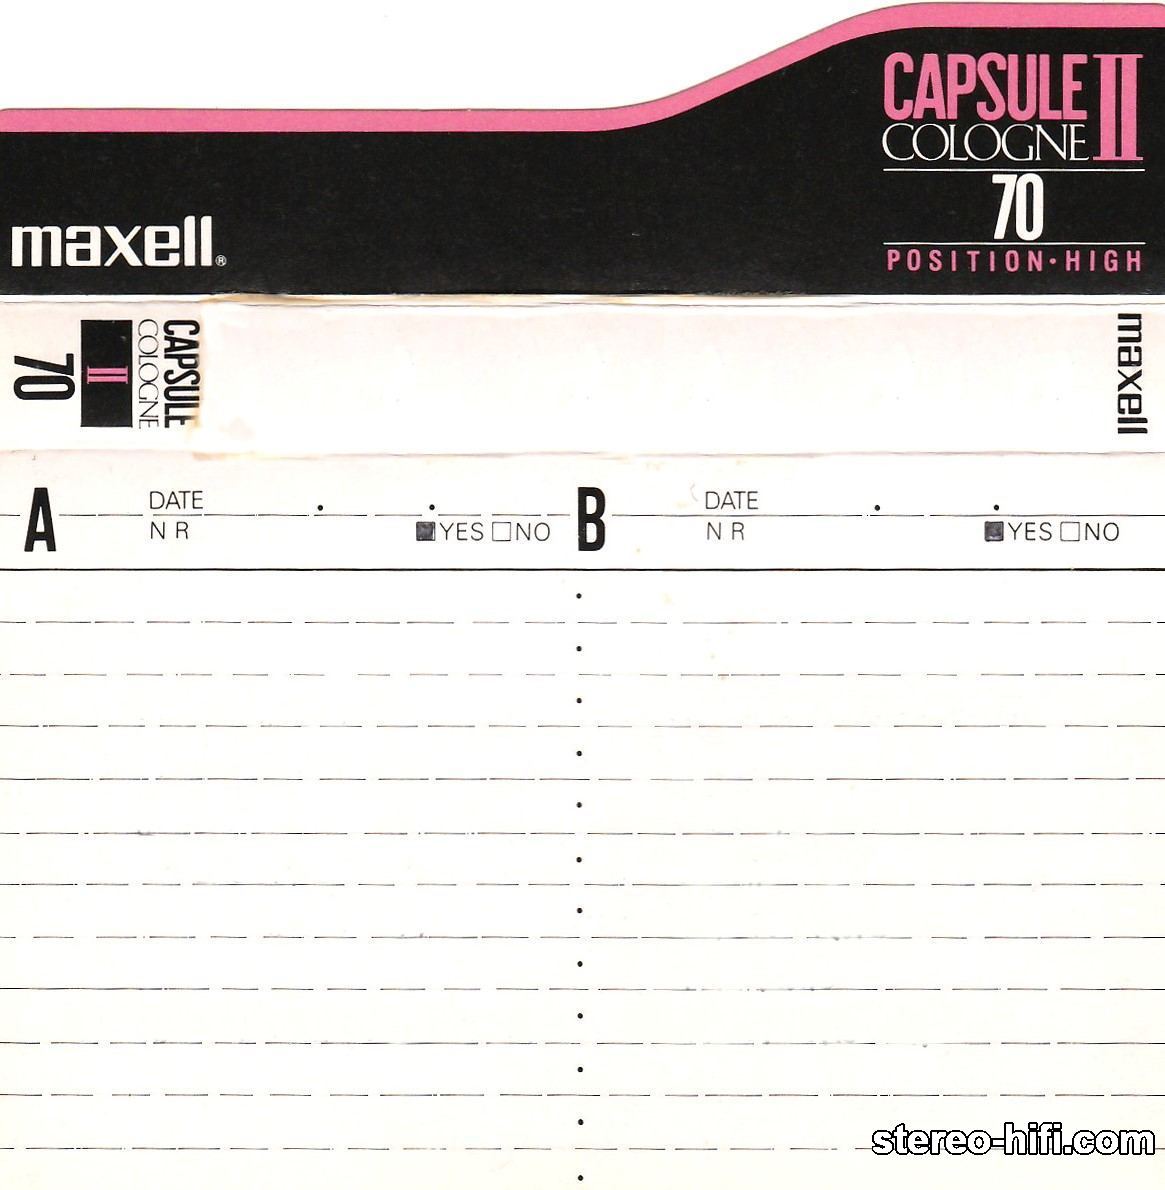 Maxell Capsule Cologne II C70 1990 JP